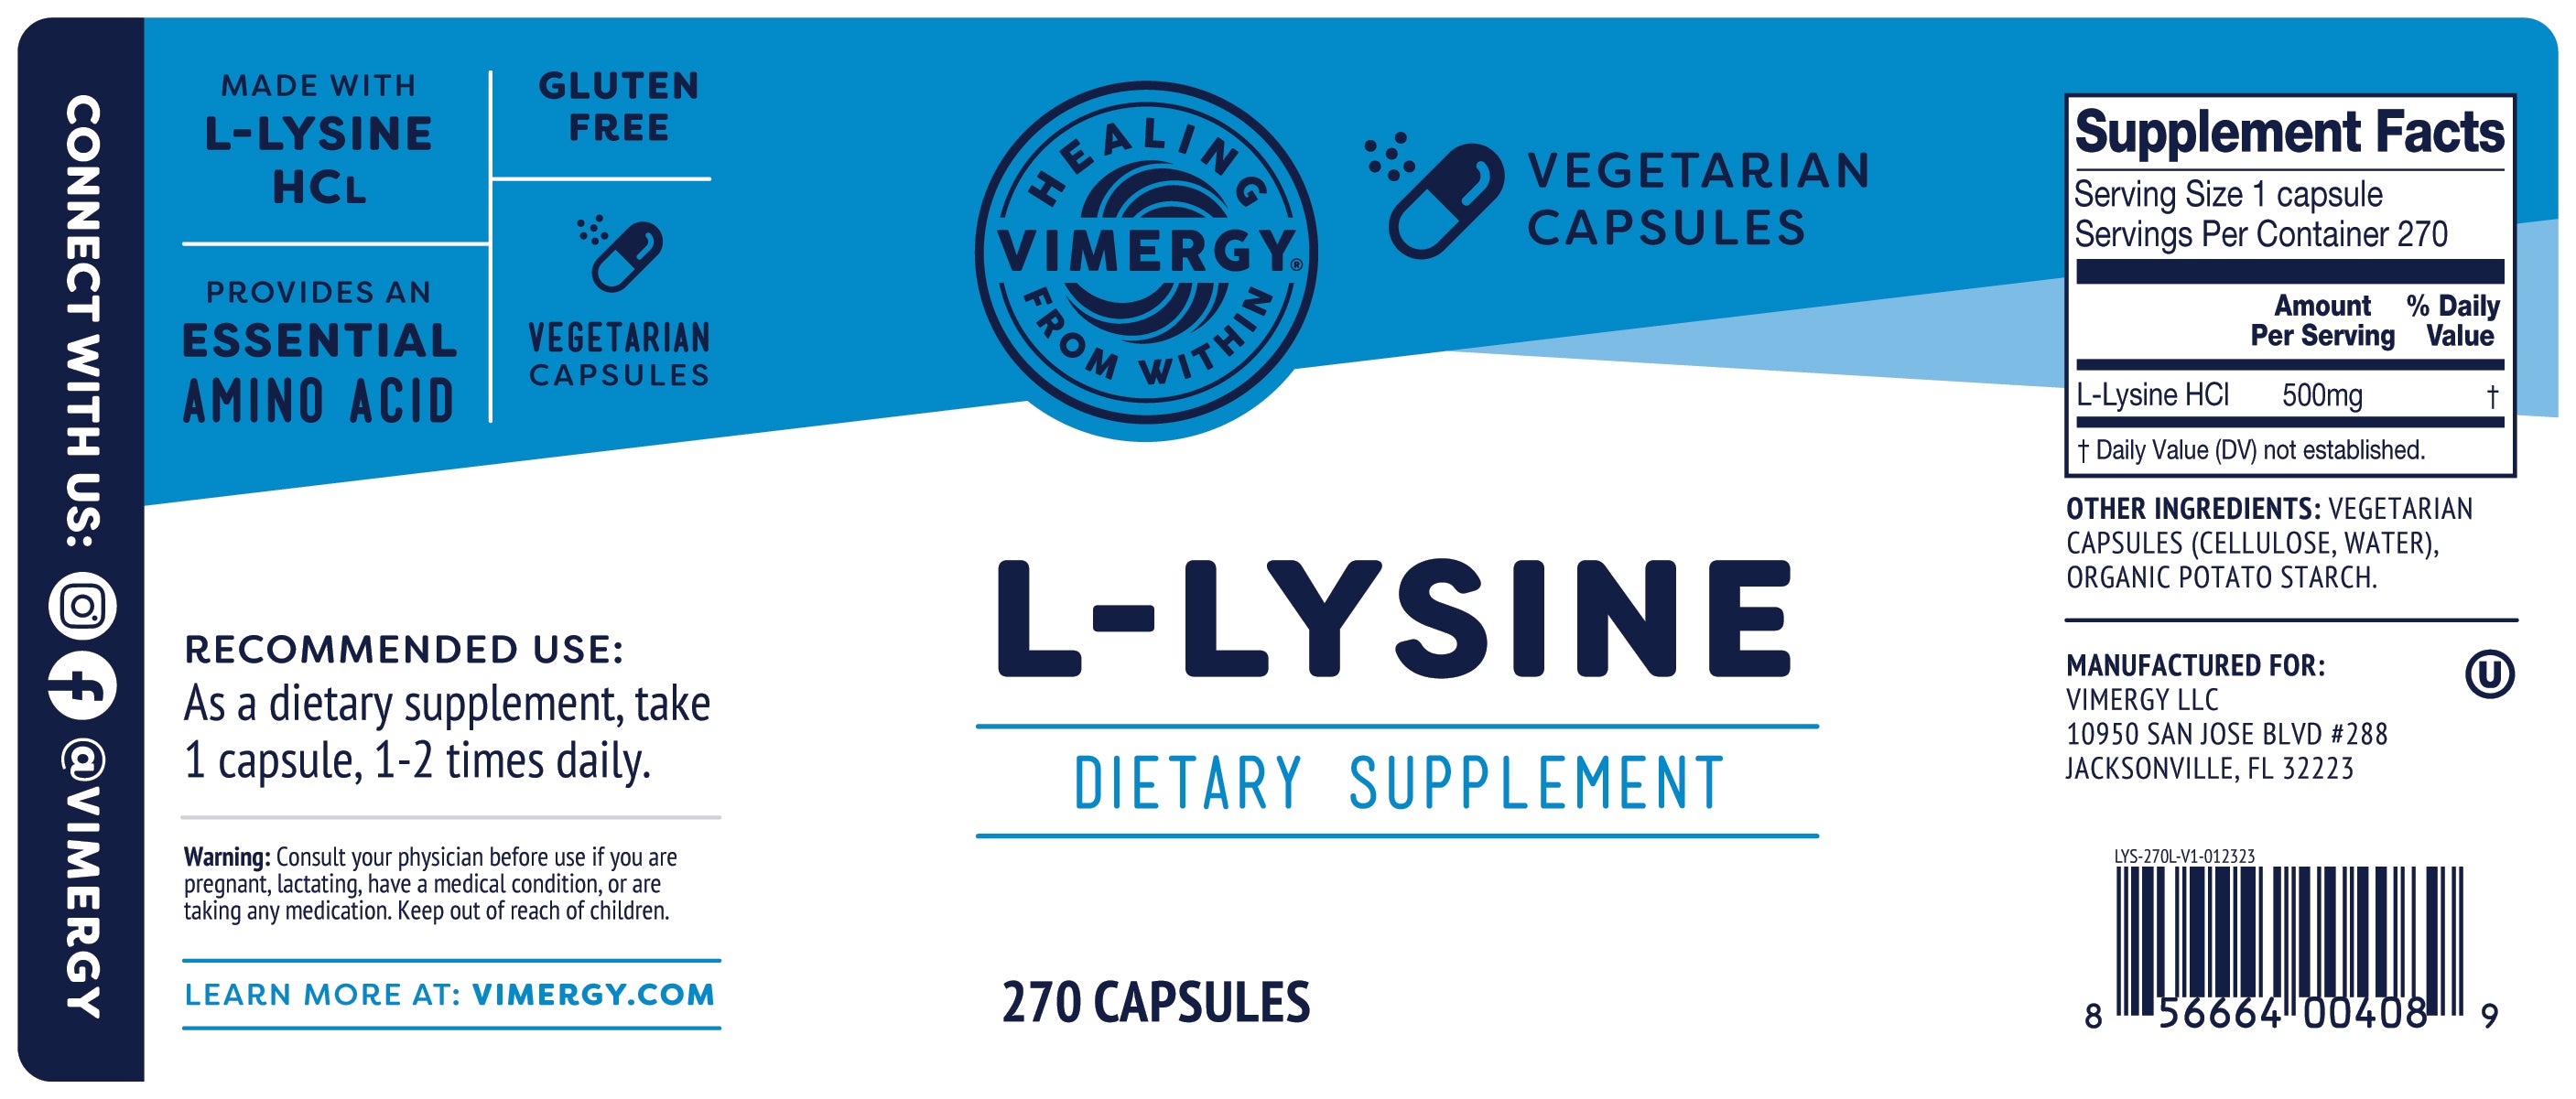 Vimergy L-Lysine 270 Capsules